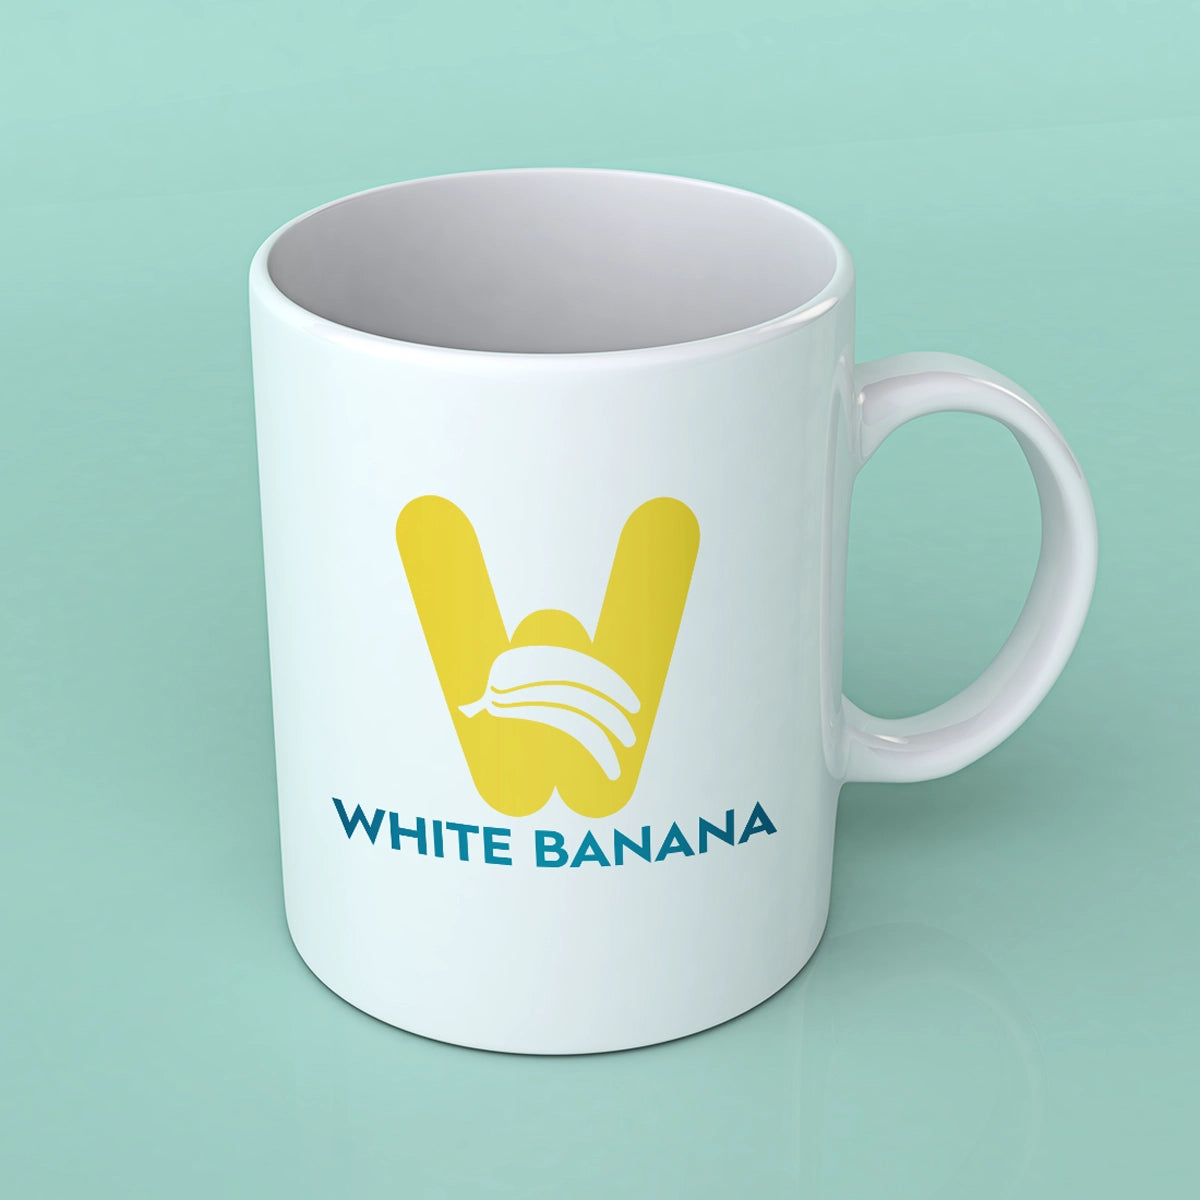 whitebanana.com